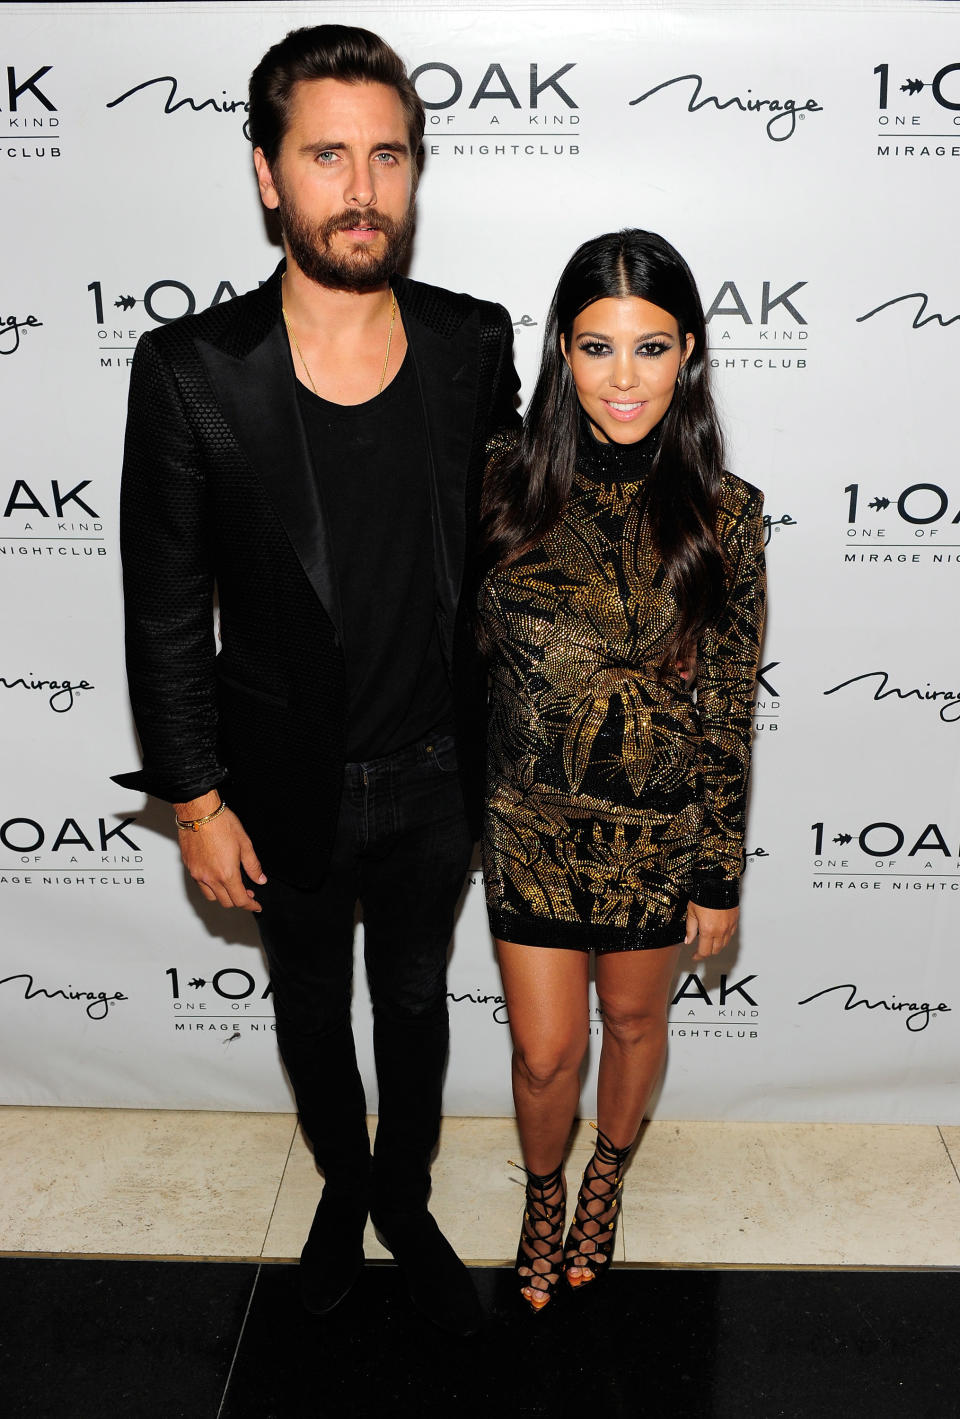  Television personalities Scott Disick (L) and Kourtney Kardashian attend Scott's birthday celebration at 1 OAK Nightclub at The Mirage Hotel & Casino on May 23, 2015 in Las Vegas, Nevada.  